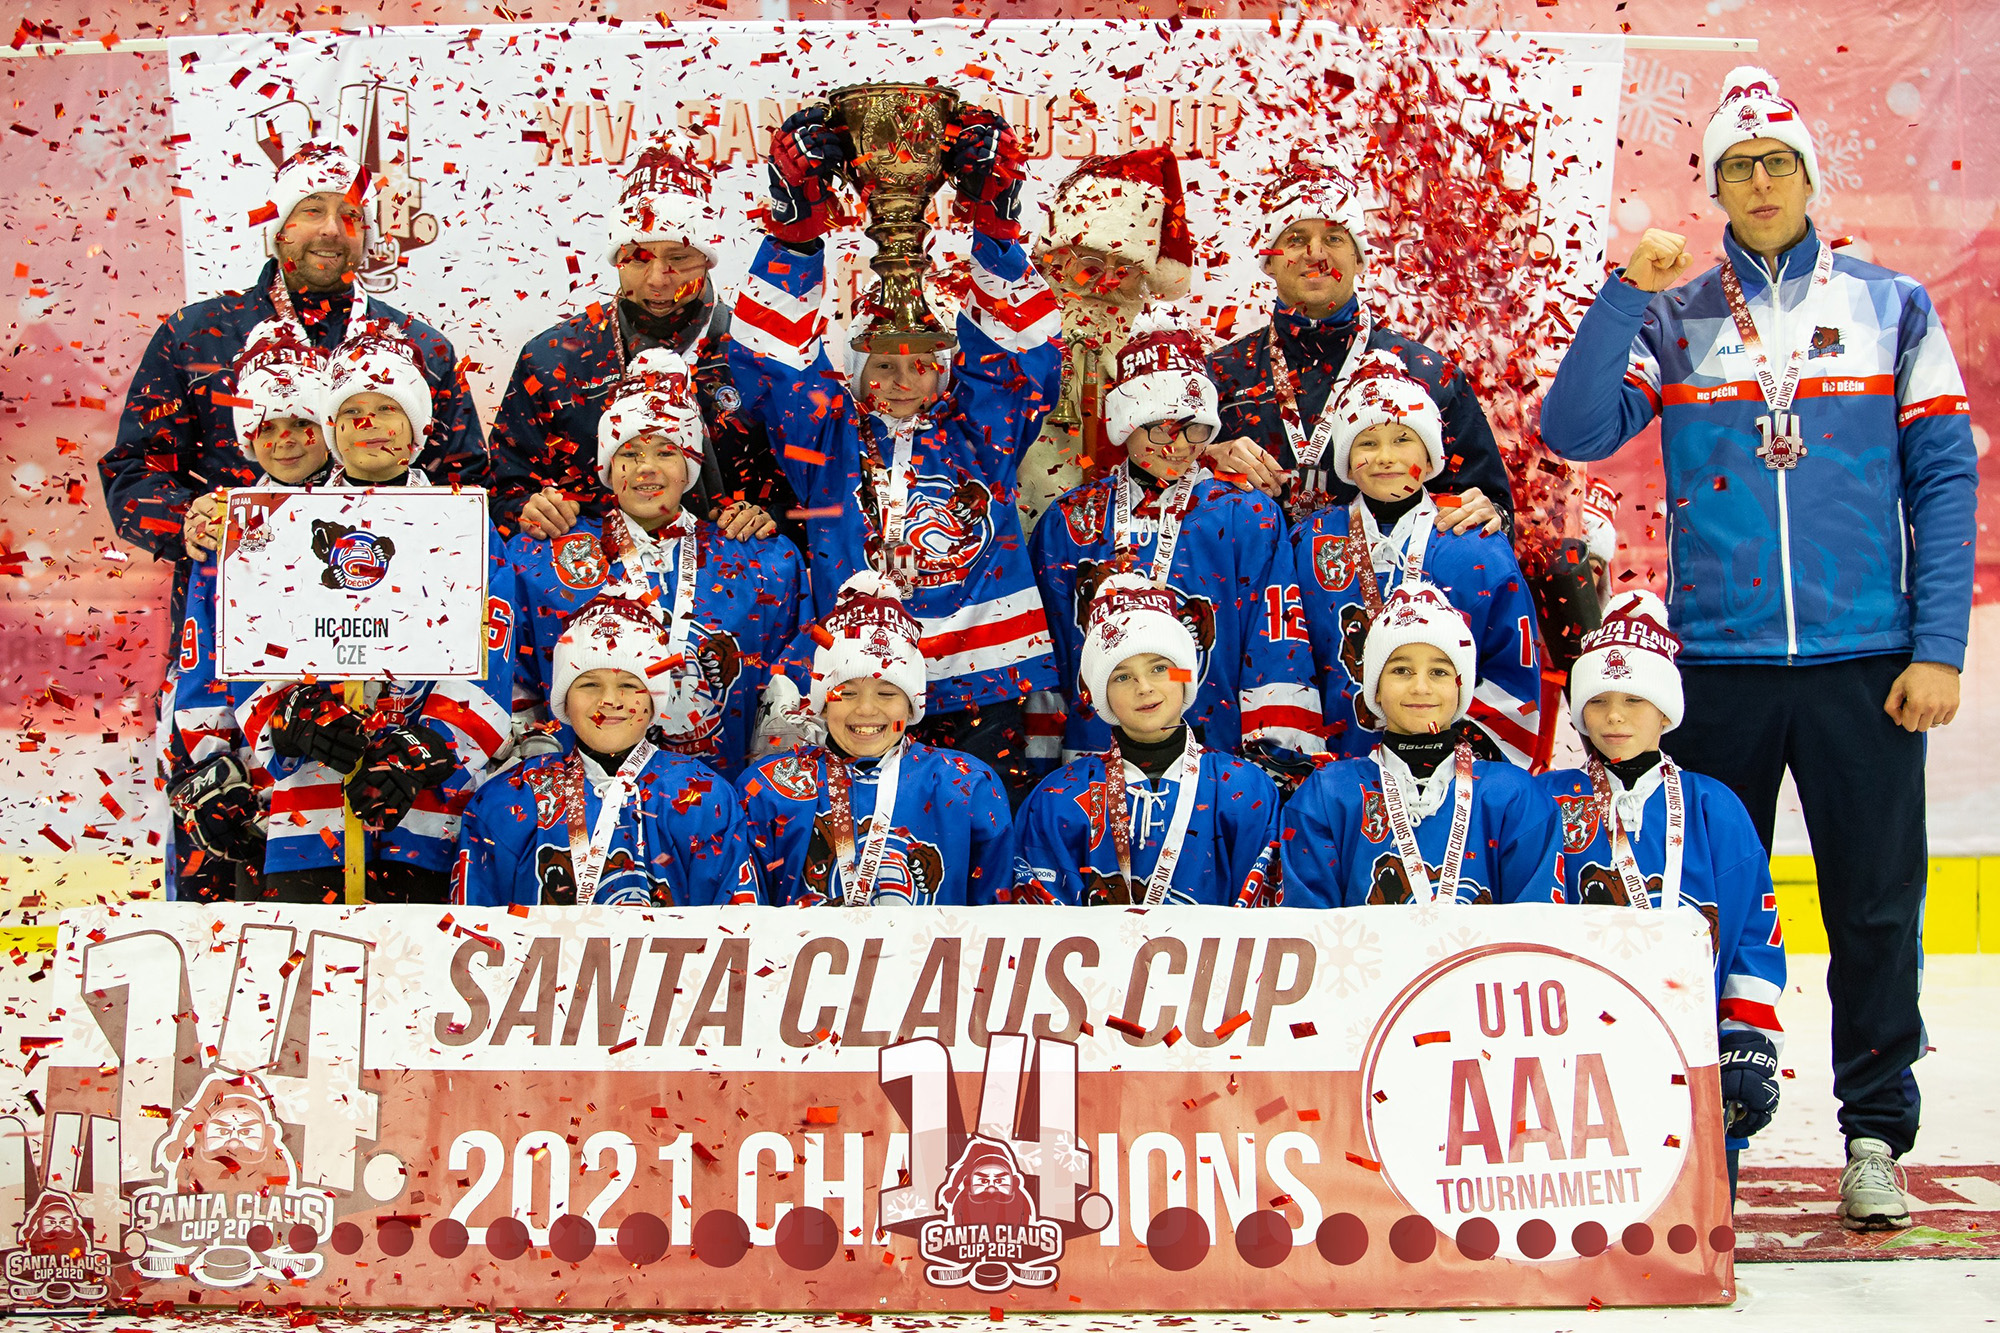 Czech Decín wins the Santa Claus Cup undefeated